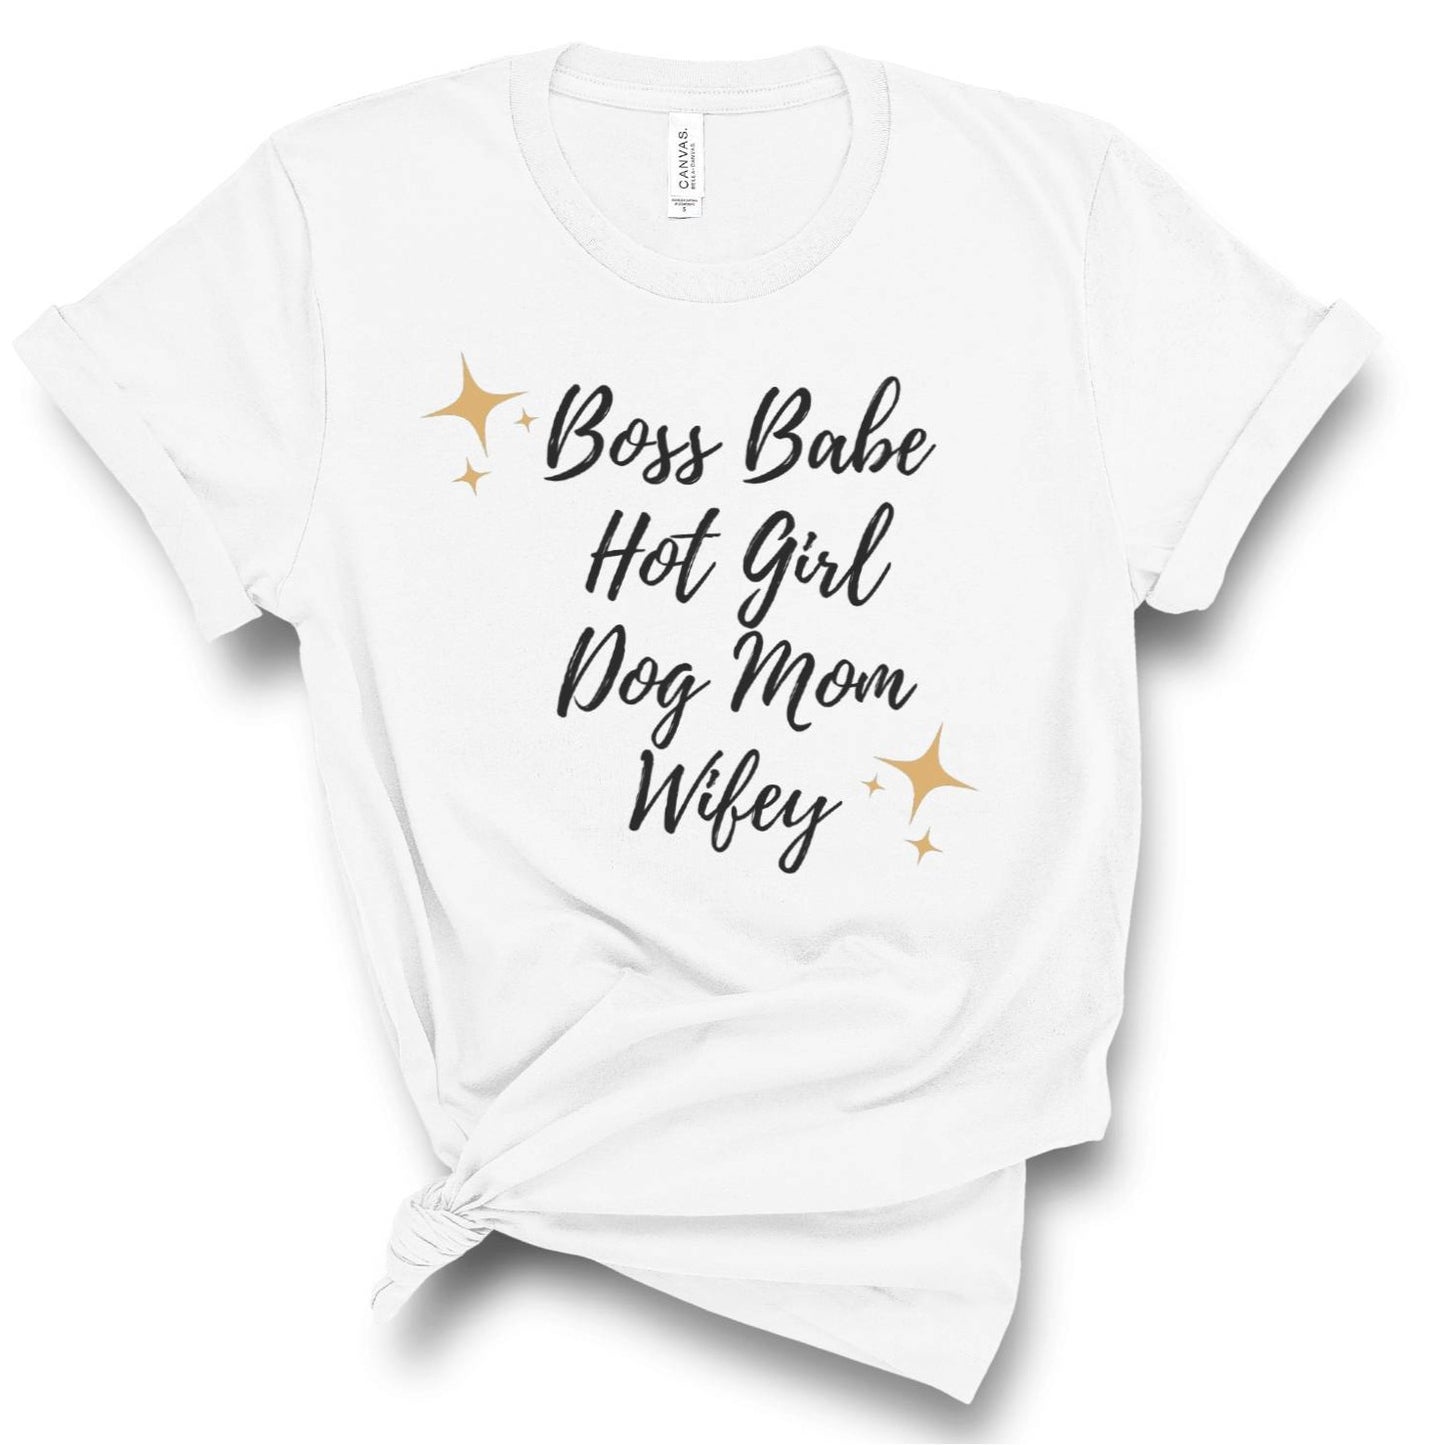 Boss Babe - Hot Girl - Dog Mom - Wifey